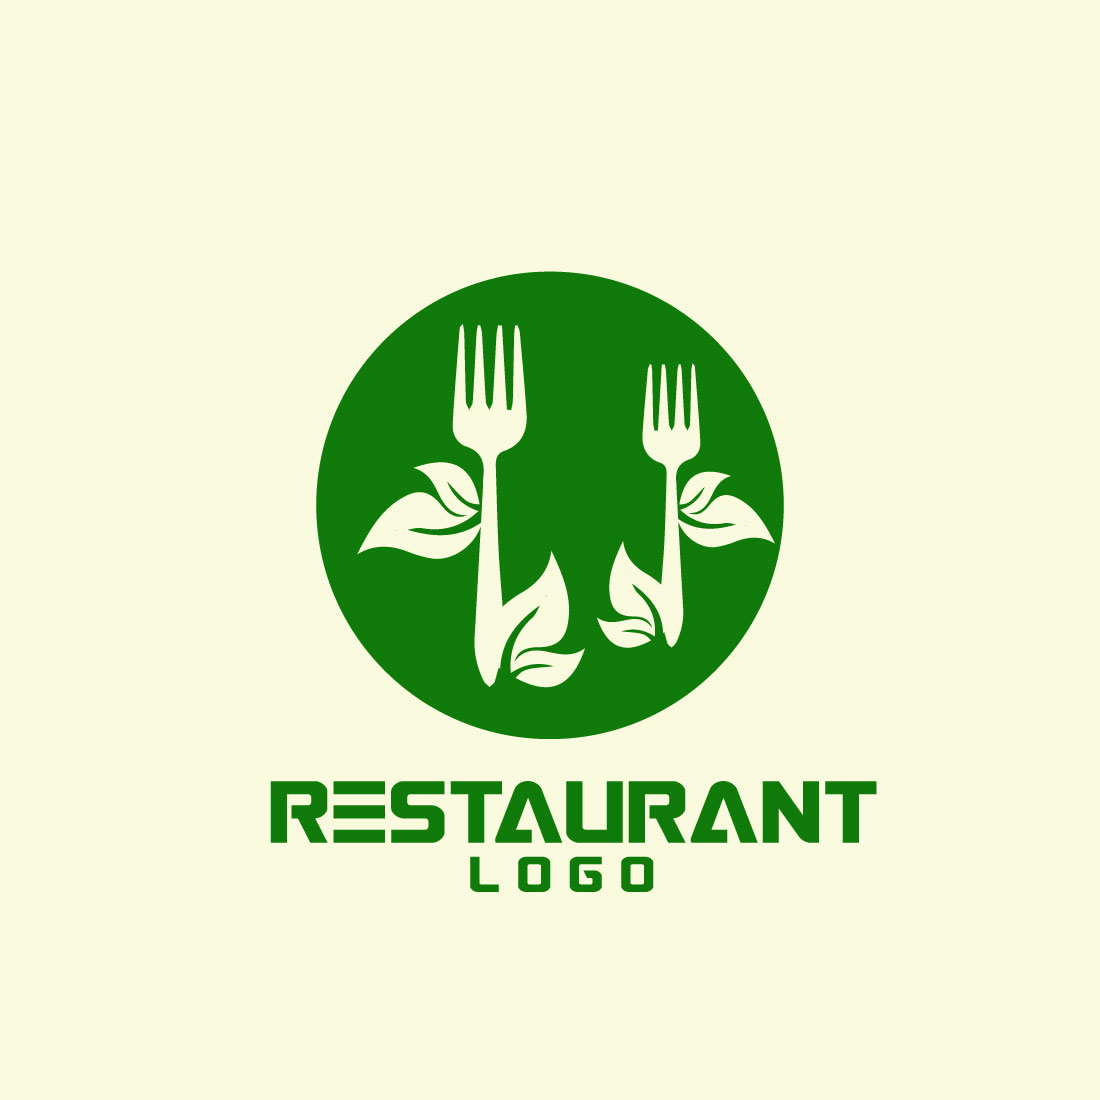 Free Organic Food Logo cover image.